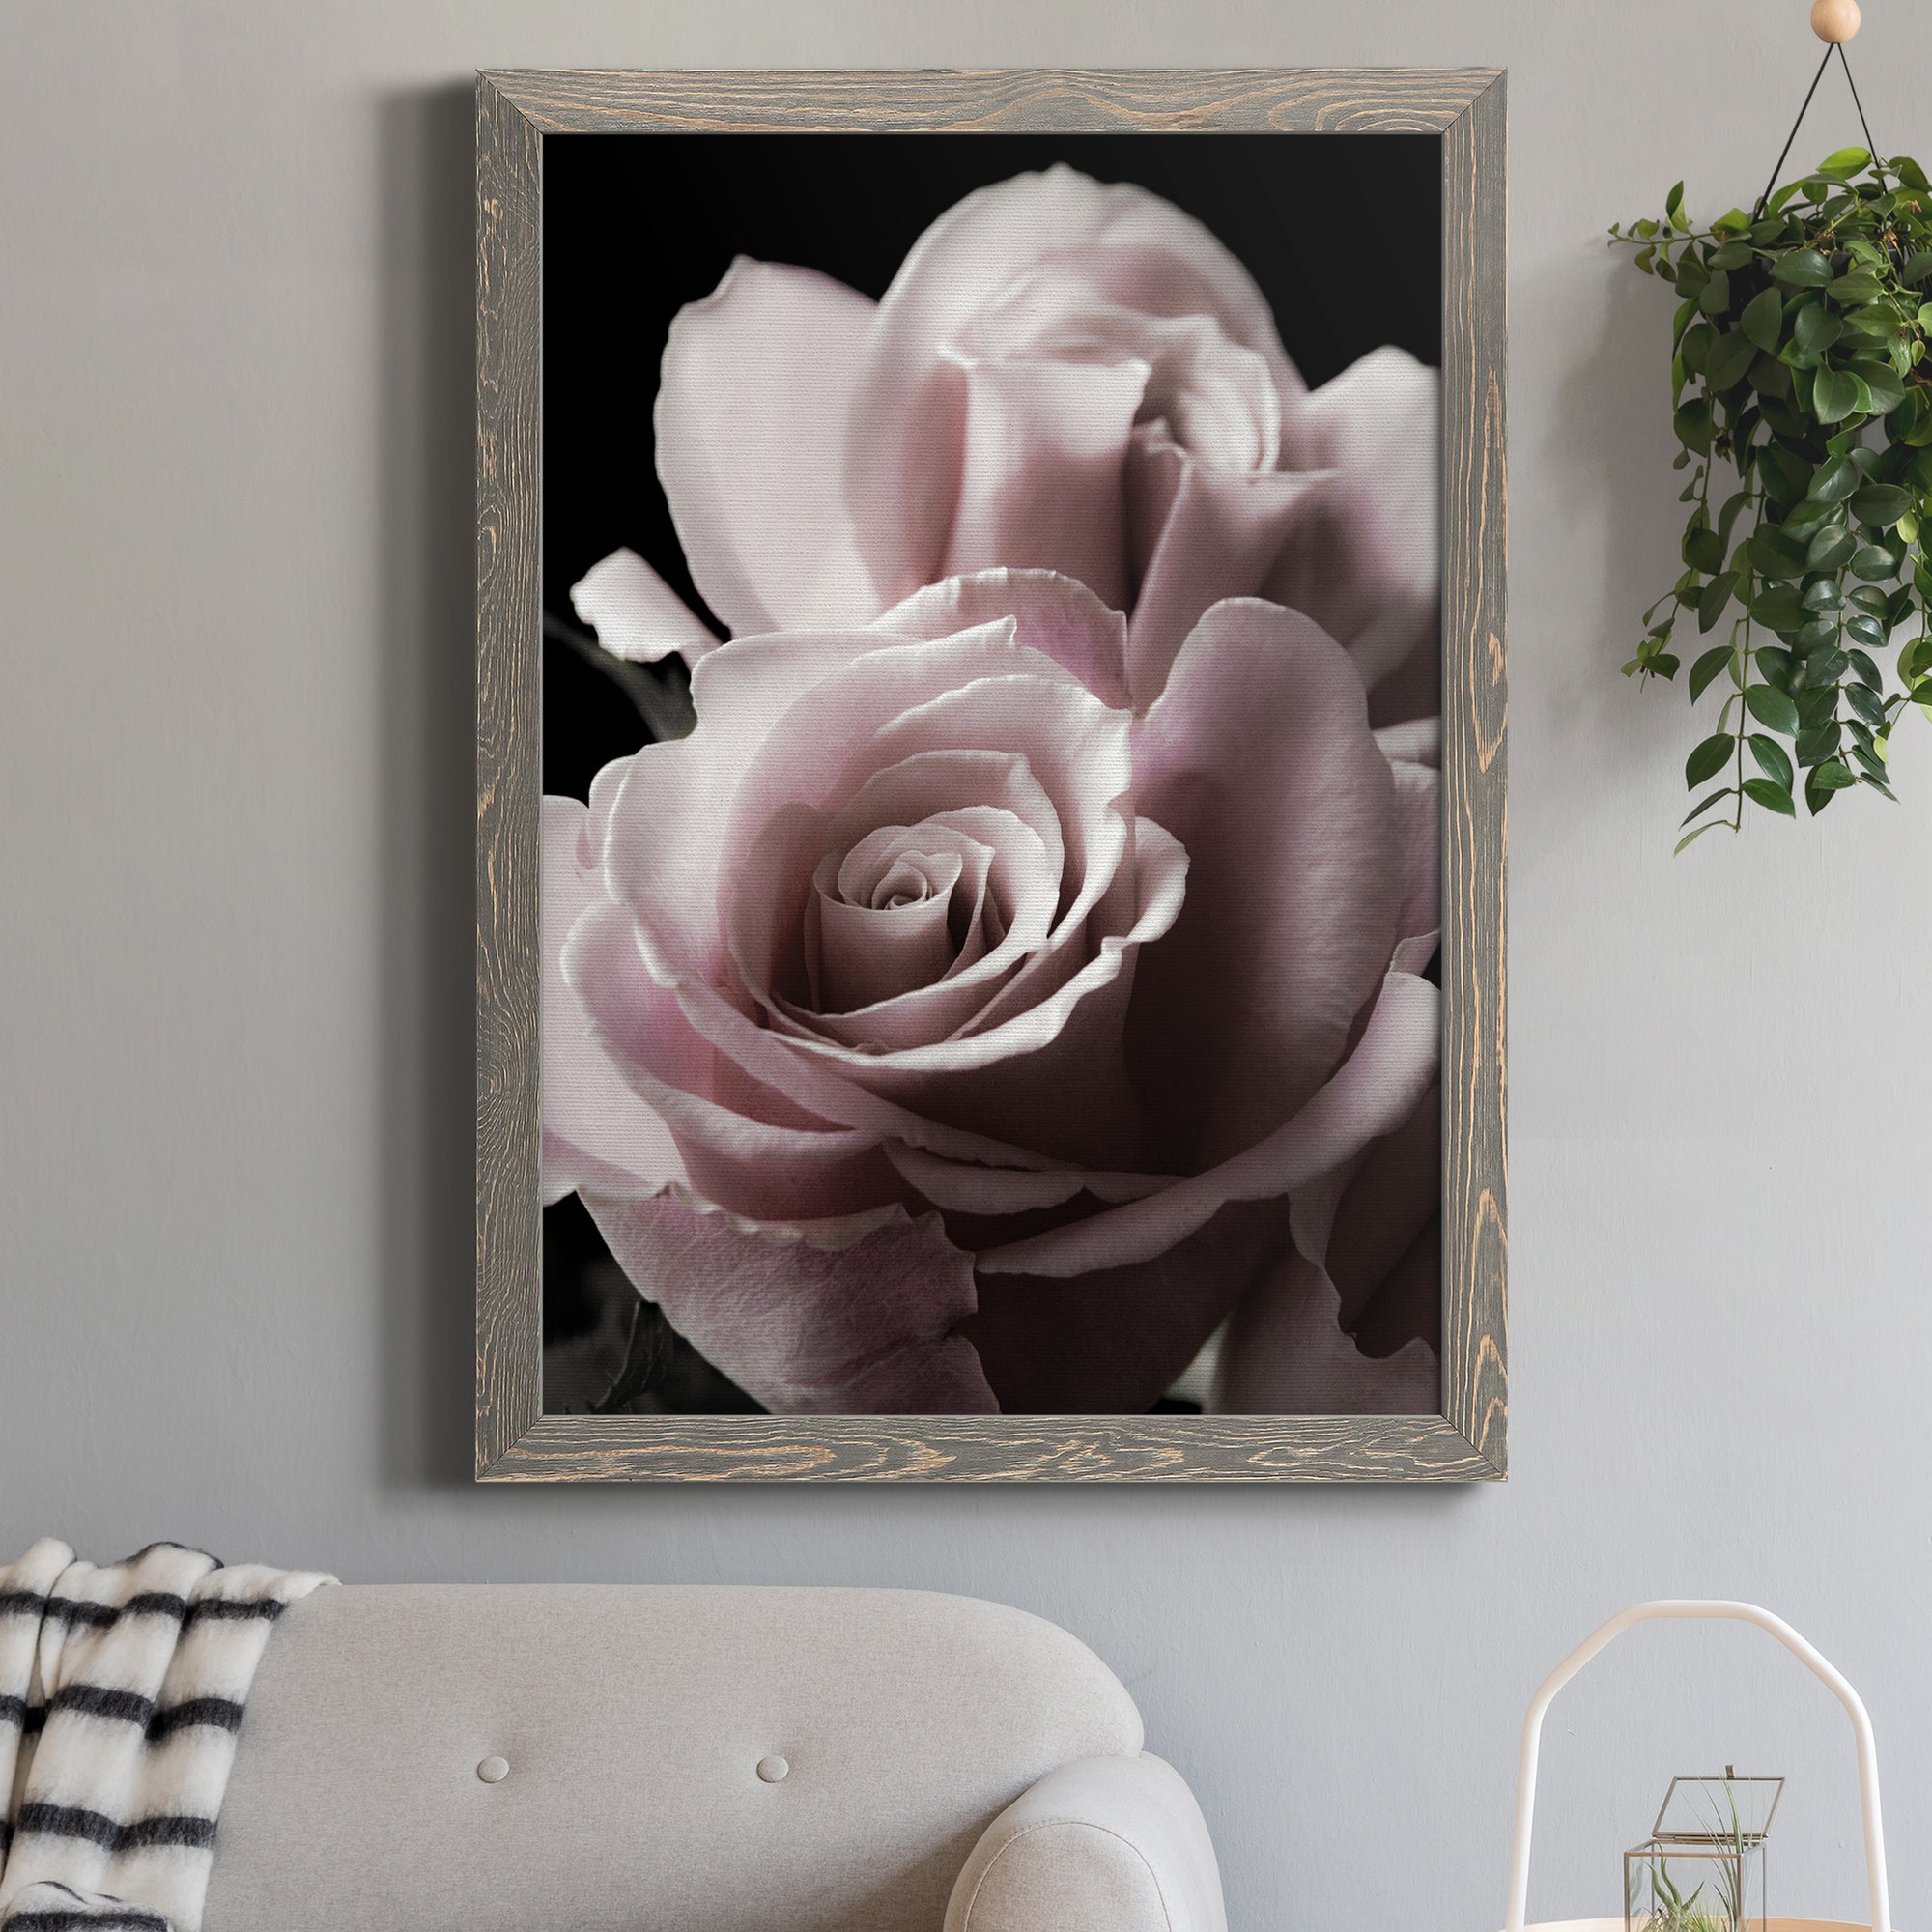 Rose Noir II - Premium Canvas Framed in Barnwood - Ready to Hang